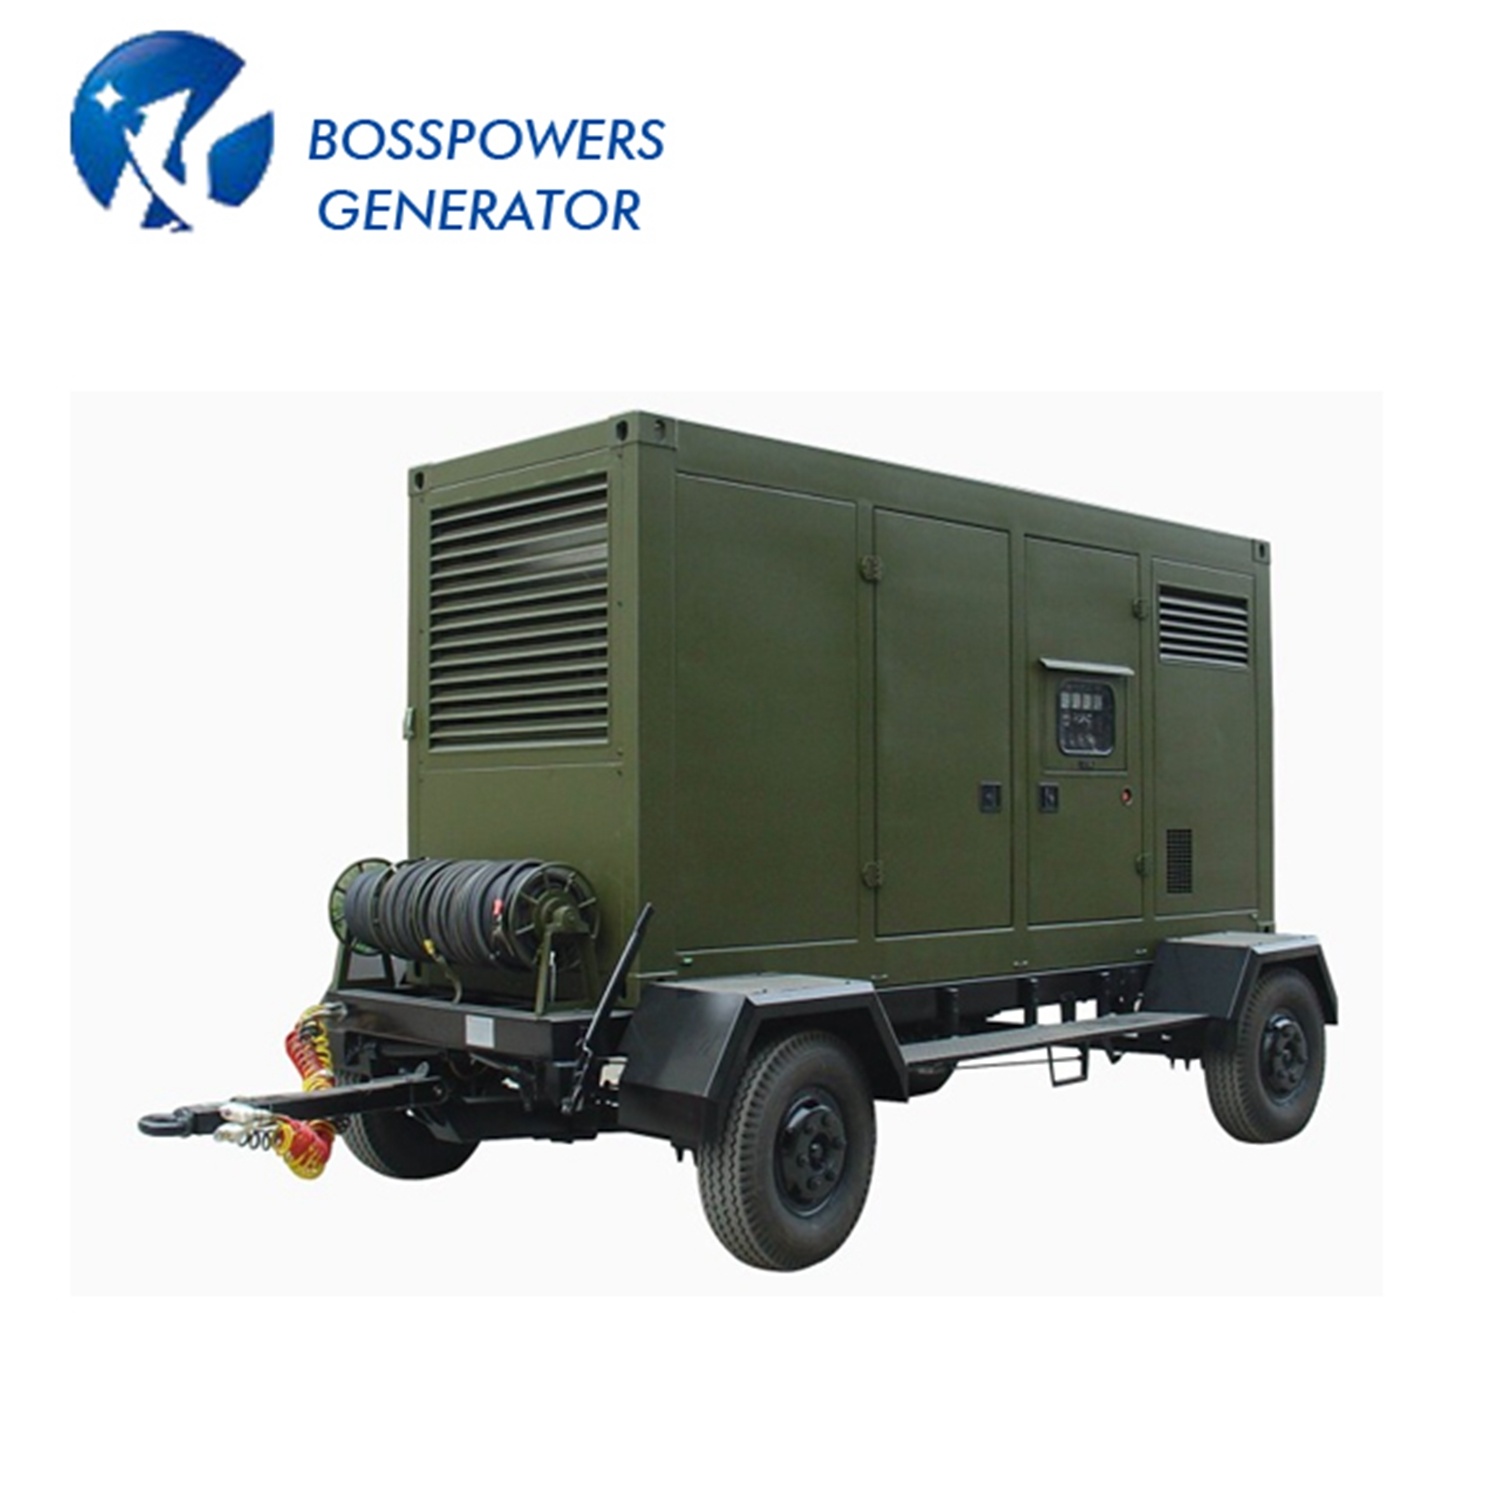 5-1500kw Mobile Diesel Generator Sets with 4 Wheel Trailer